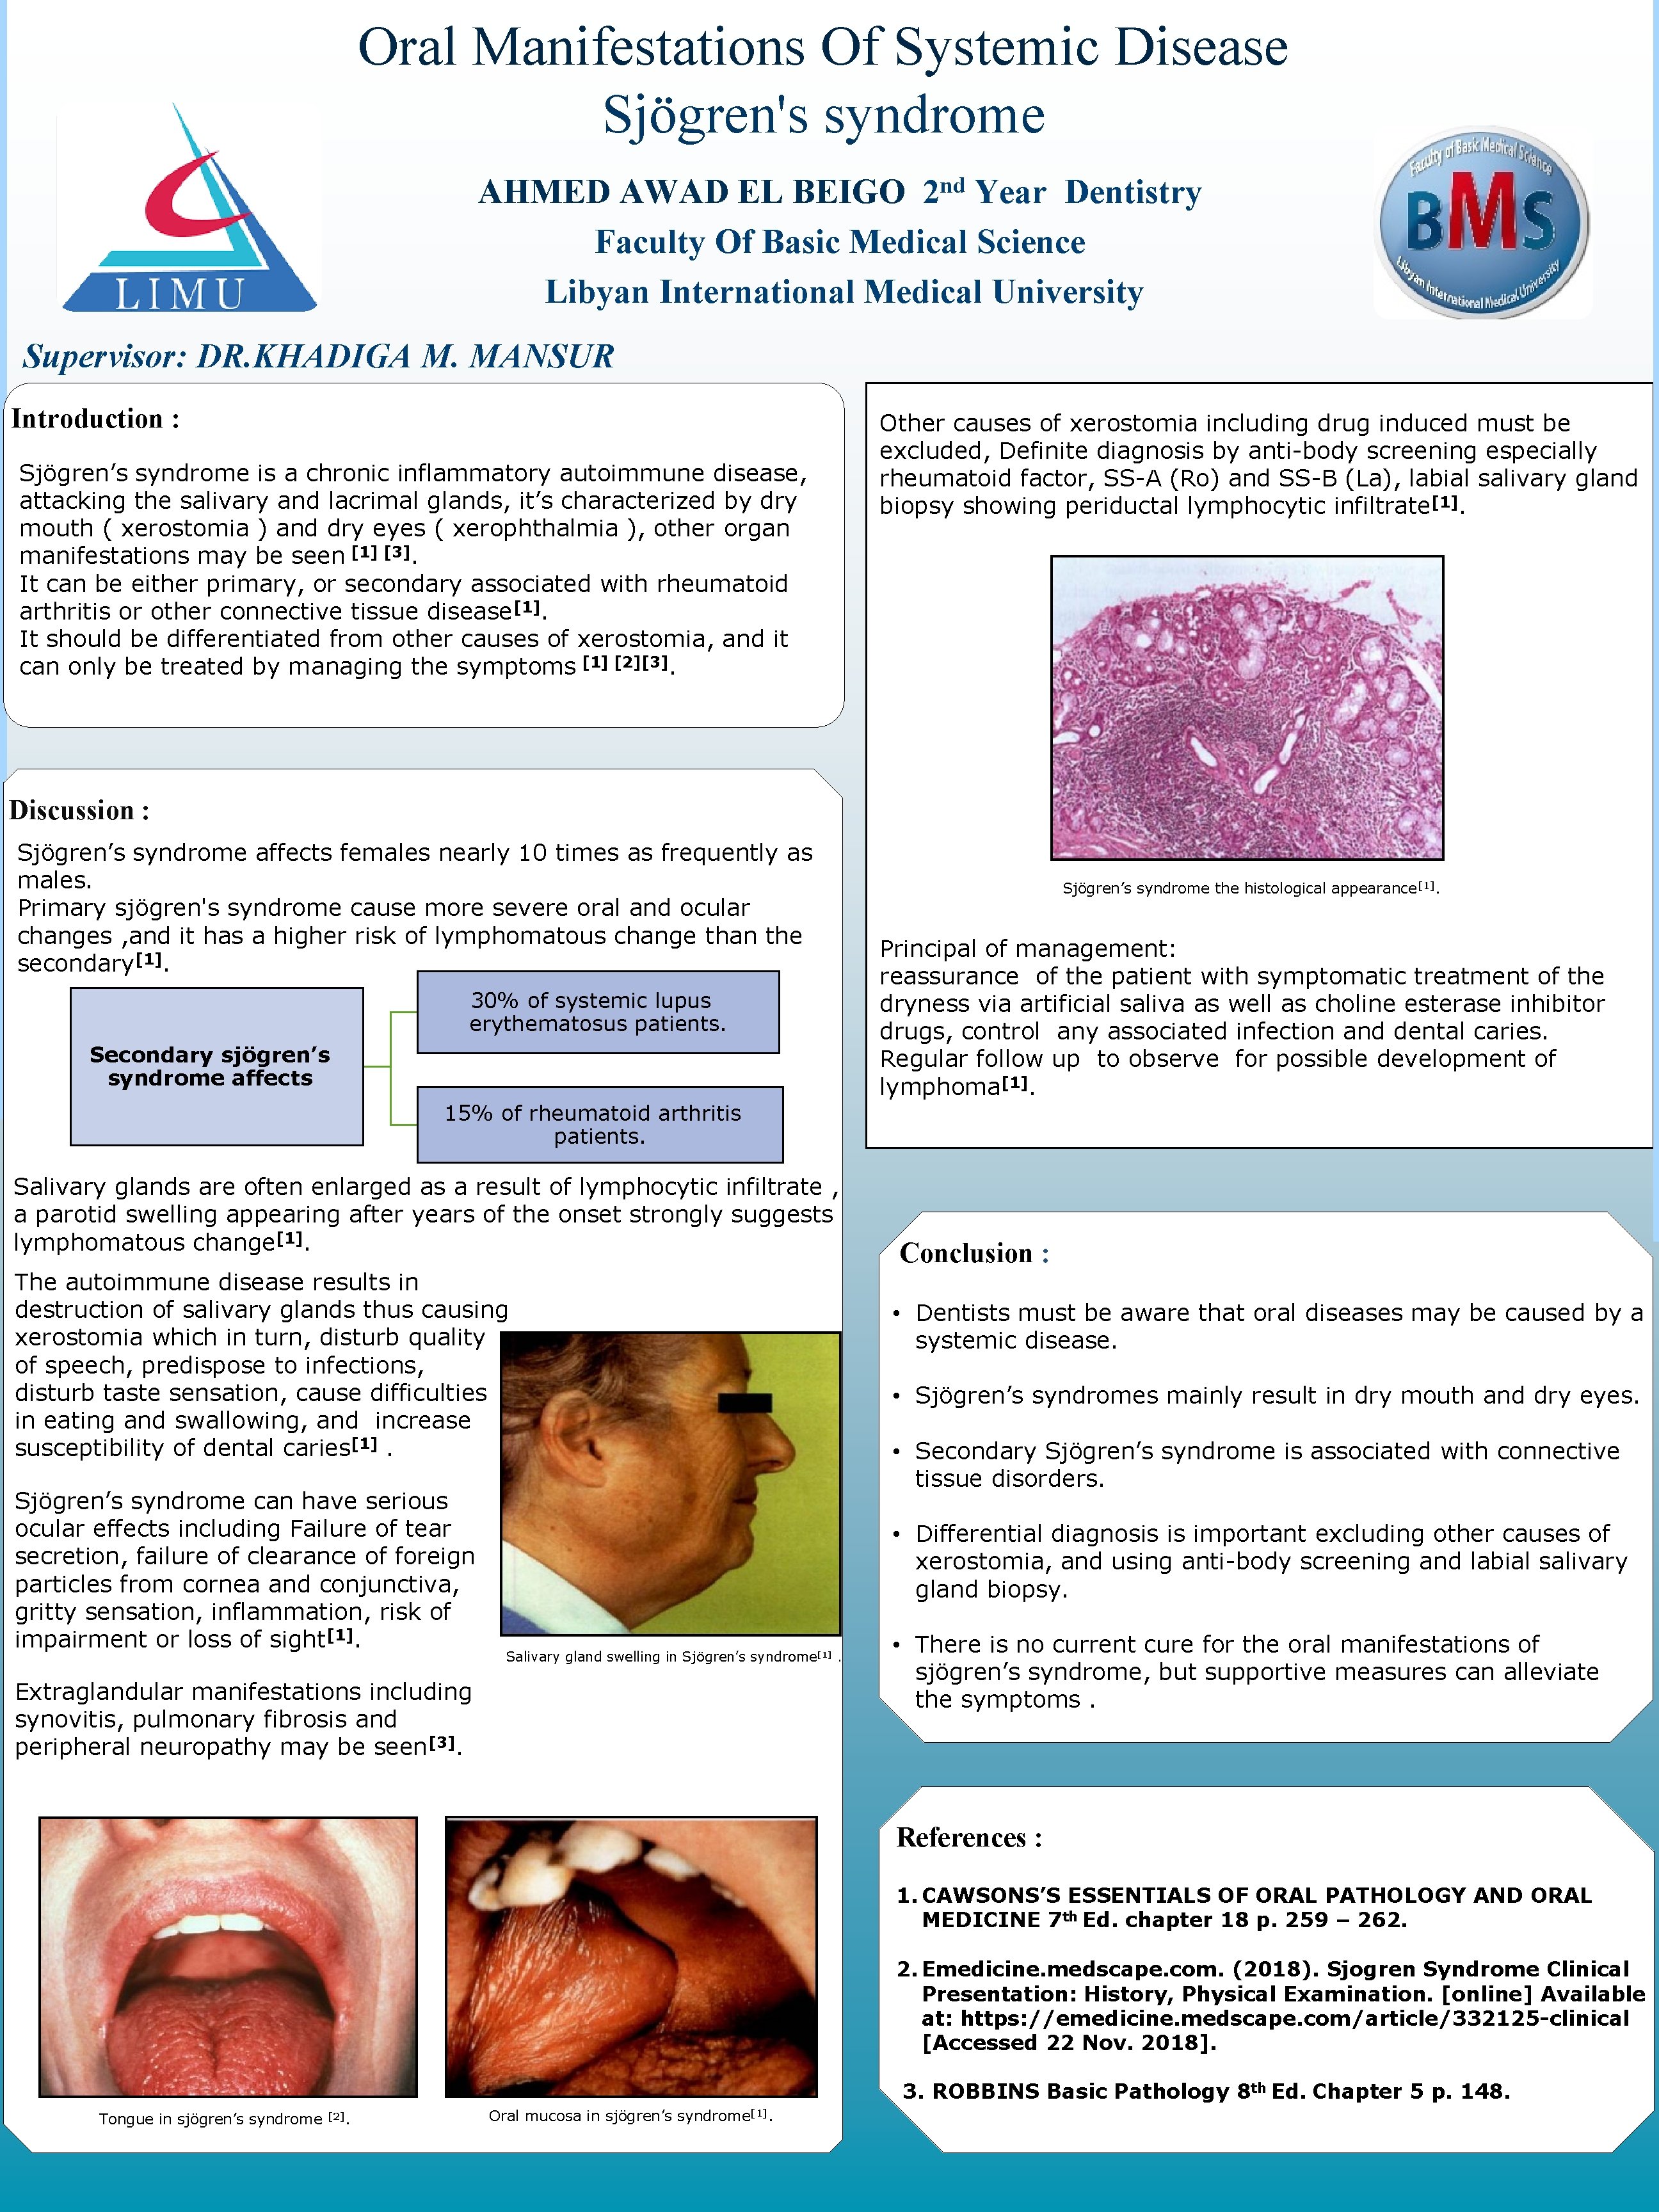 Oral Manifestations Of Systemic Disease Sjögren's syndrome nd 2 AHMED AWAD EL BEIGO Year